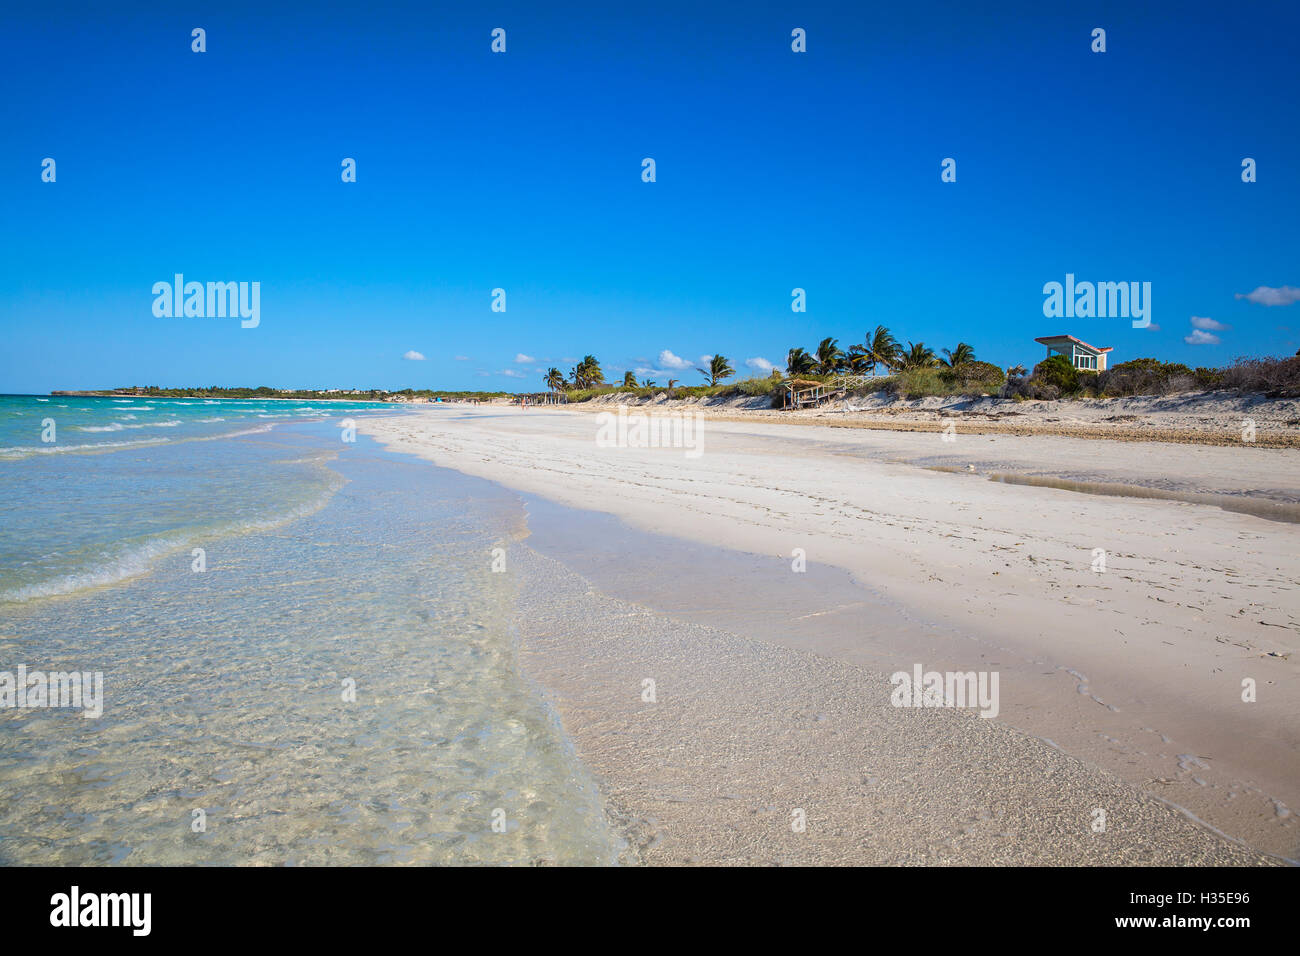 Playa Larga, Cayo Coco, Jardines del Rey, province de Ciego de Avila, Cuba, Antilles, Caraïbes Banque D'Images